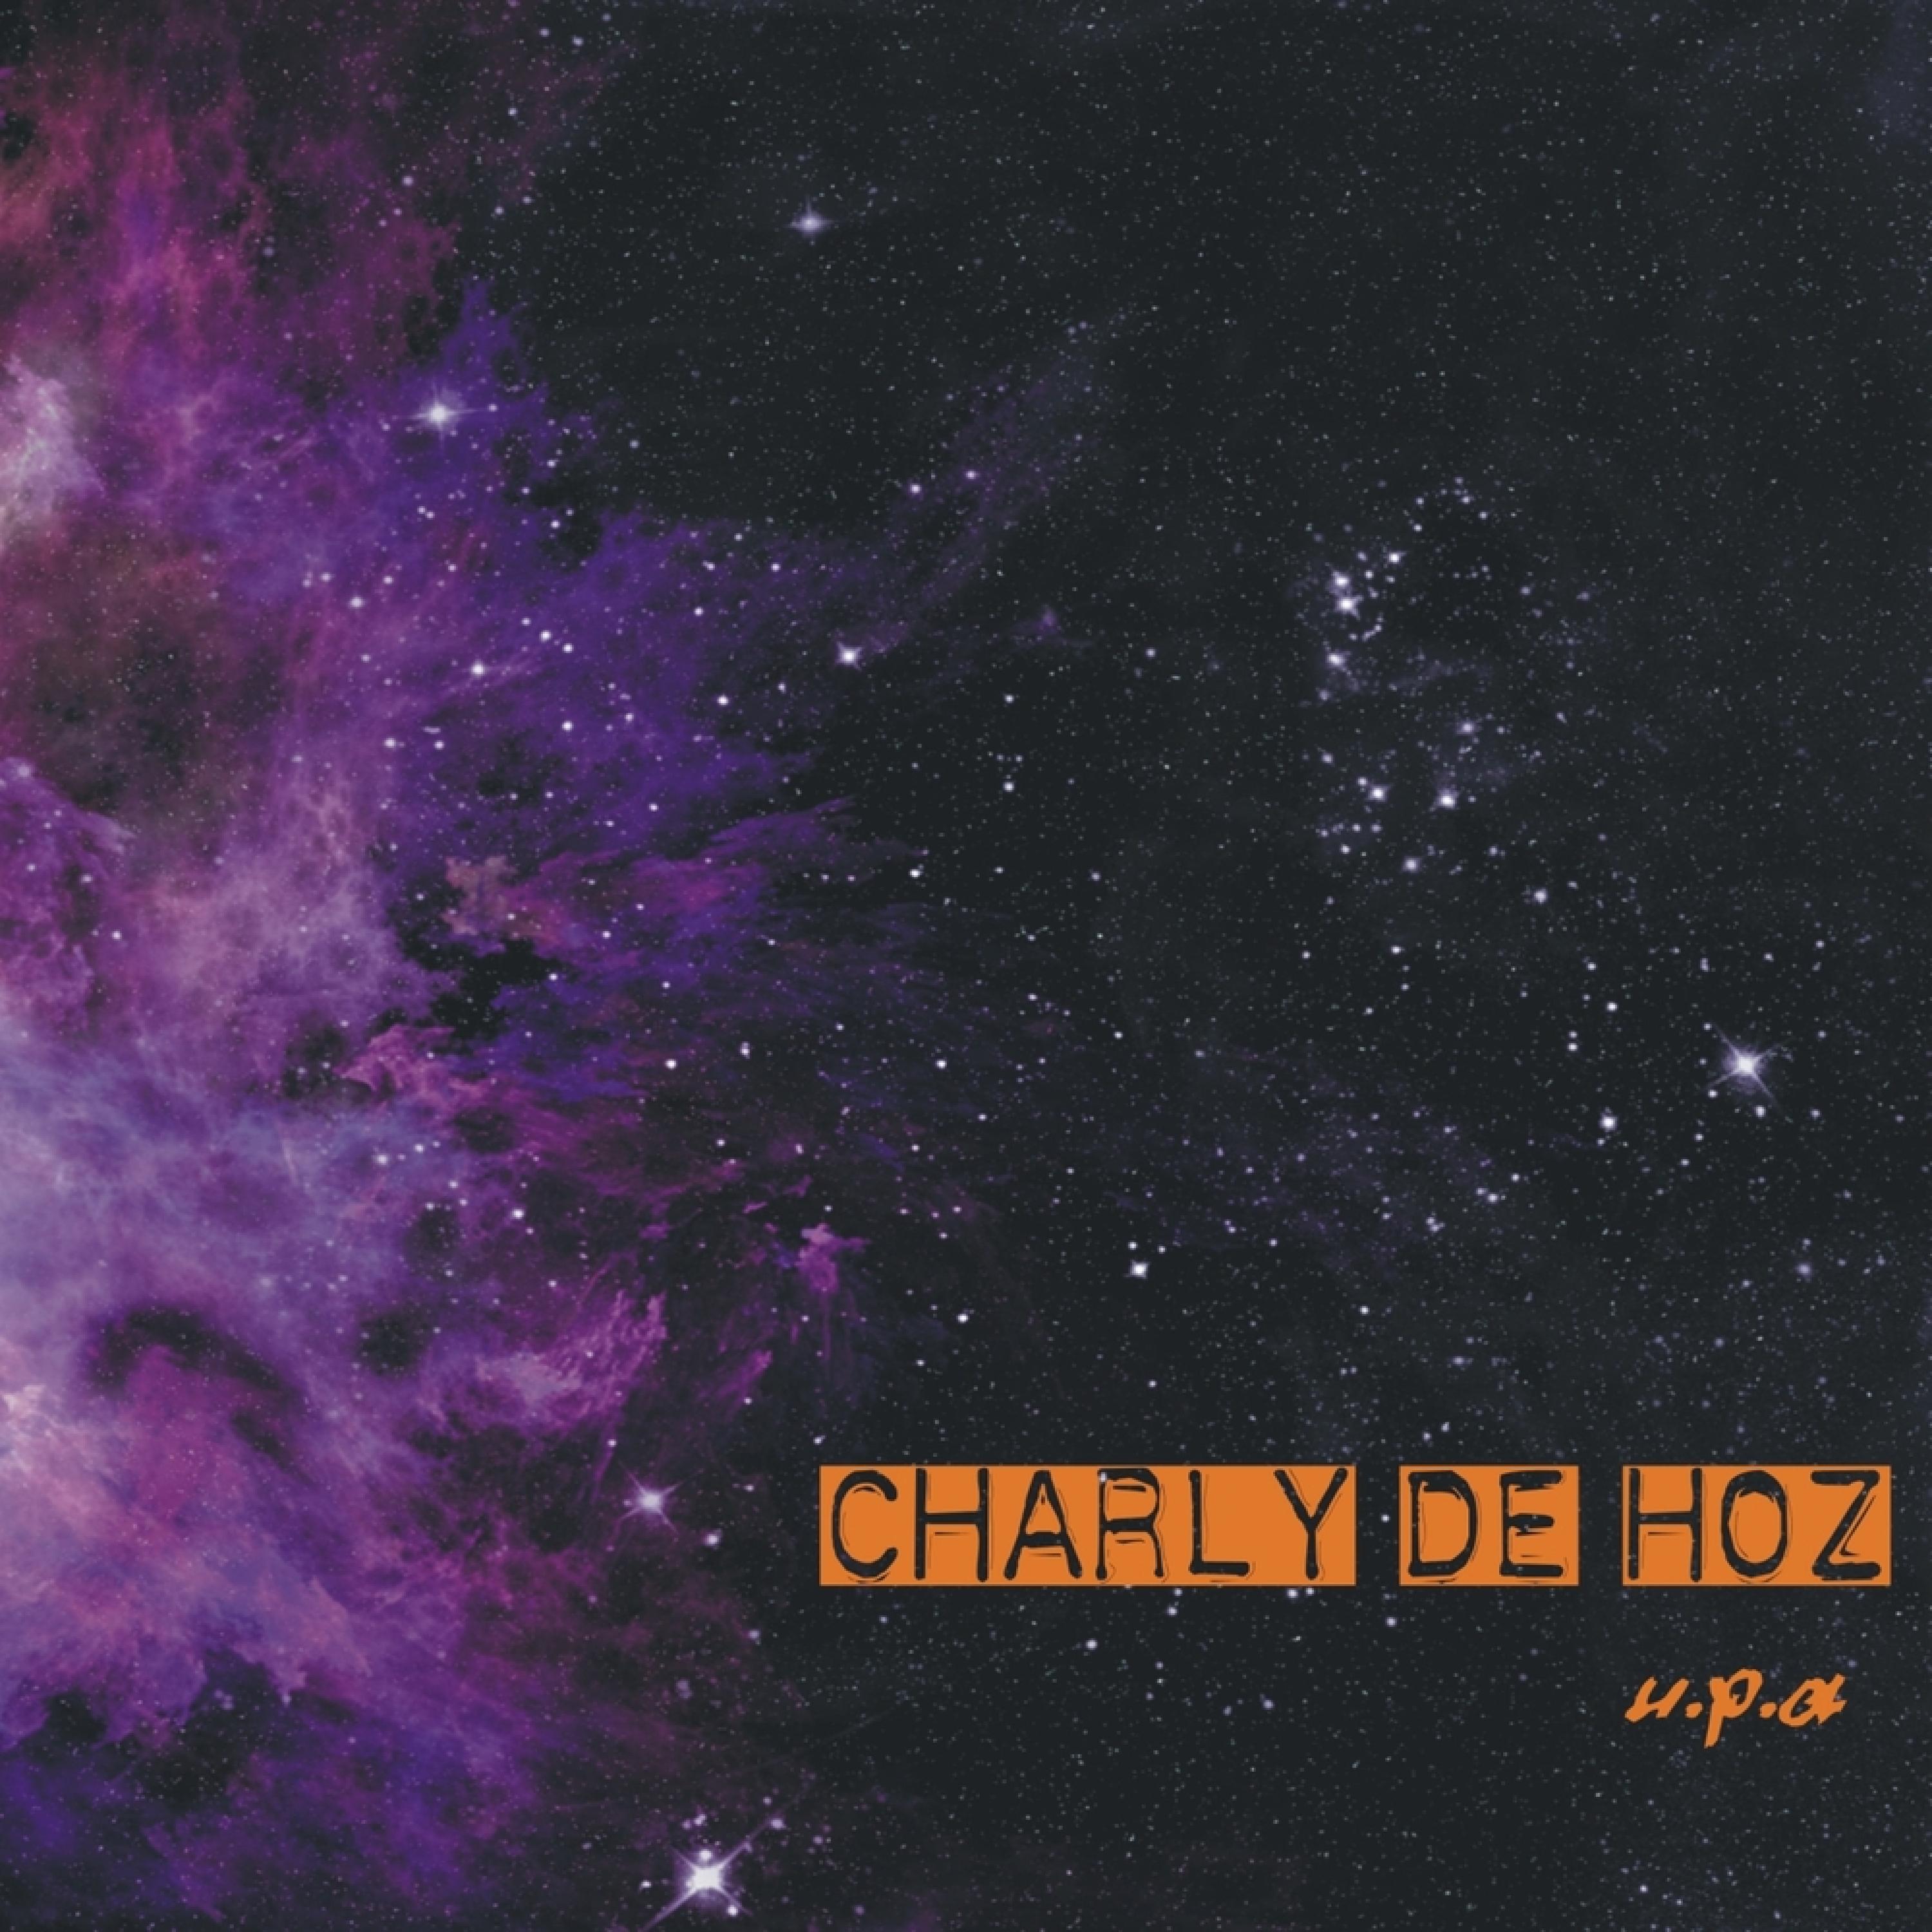 Charly de Hoz - Cristo en la cruz (feat. Mariano de Hoz & Cris de Hoz)